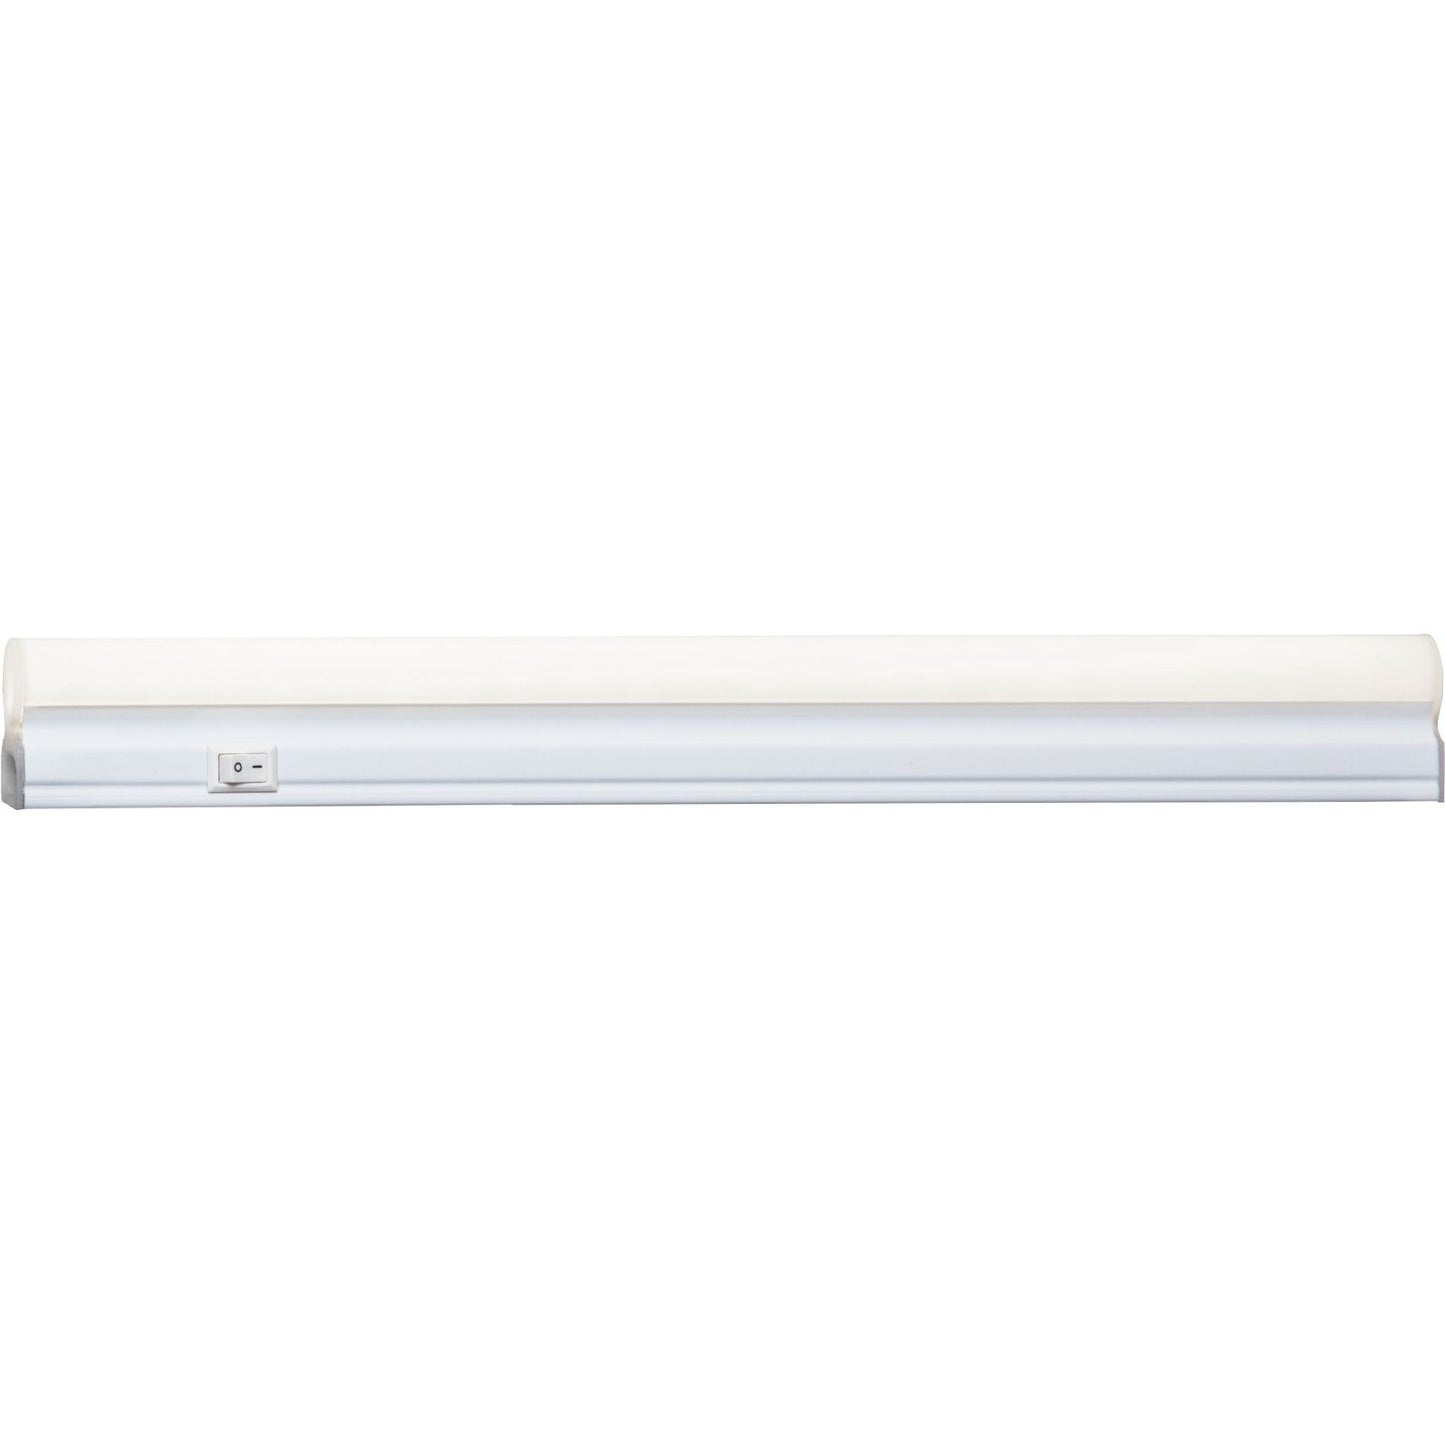 led-lampa-integra-cabinet-367-02